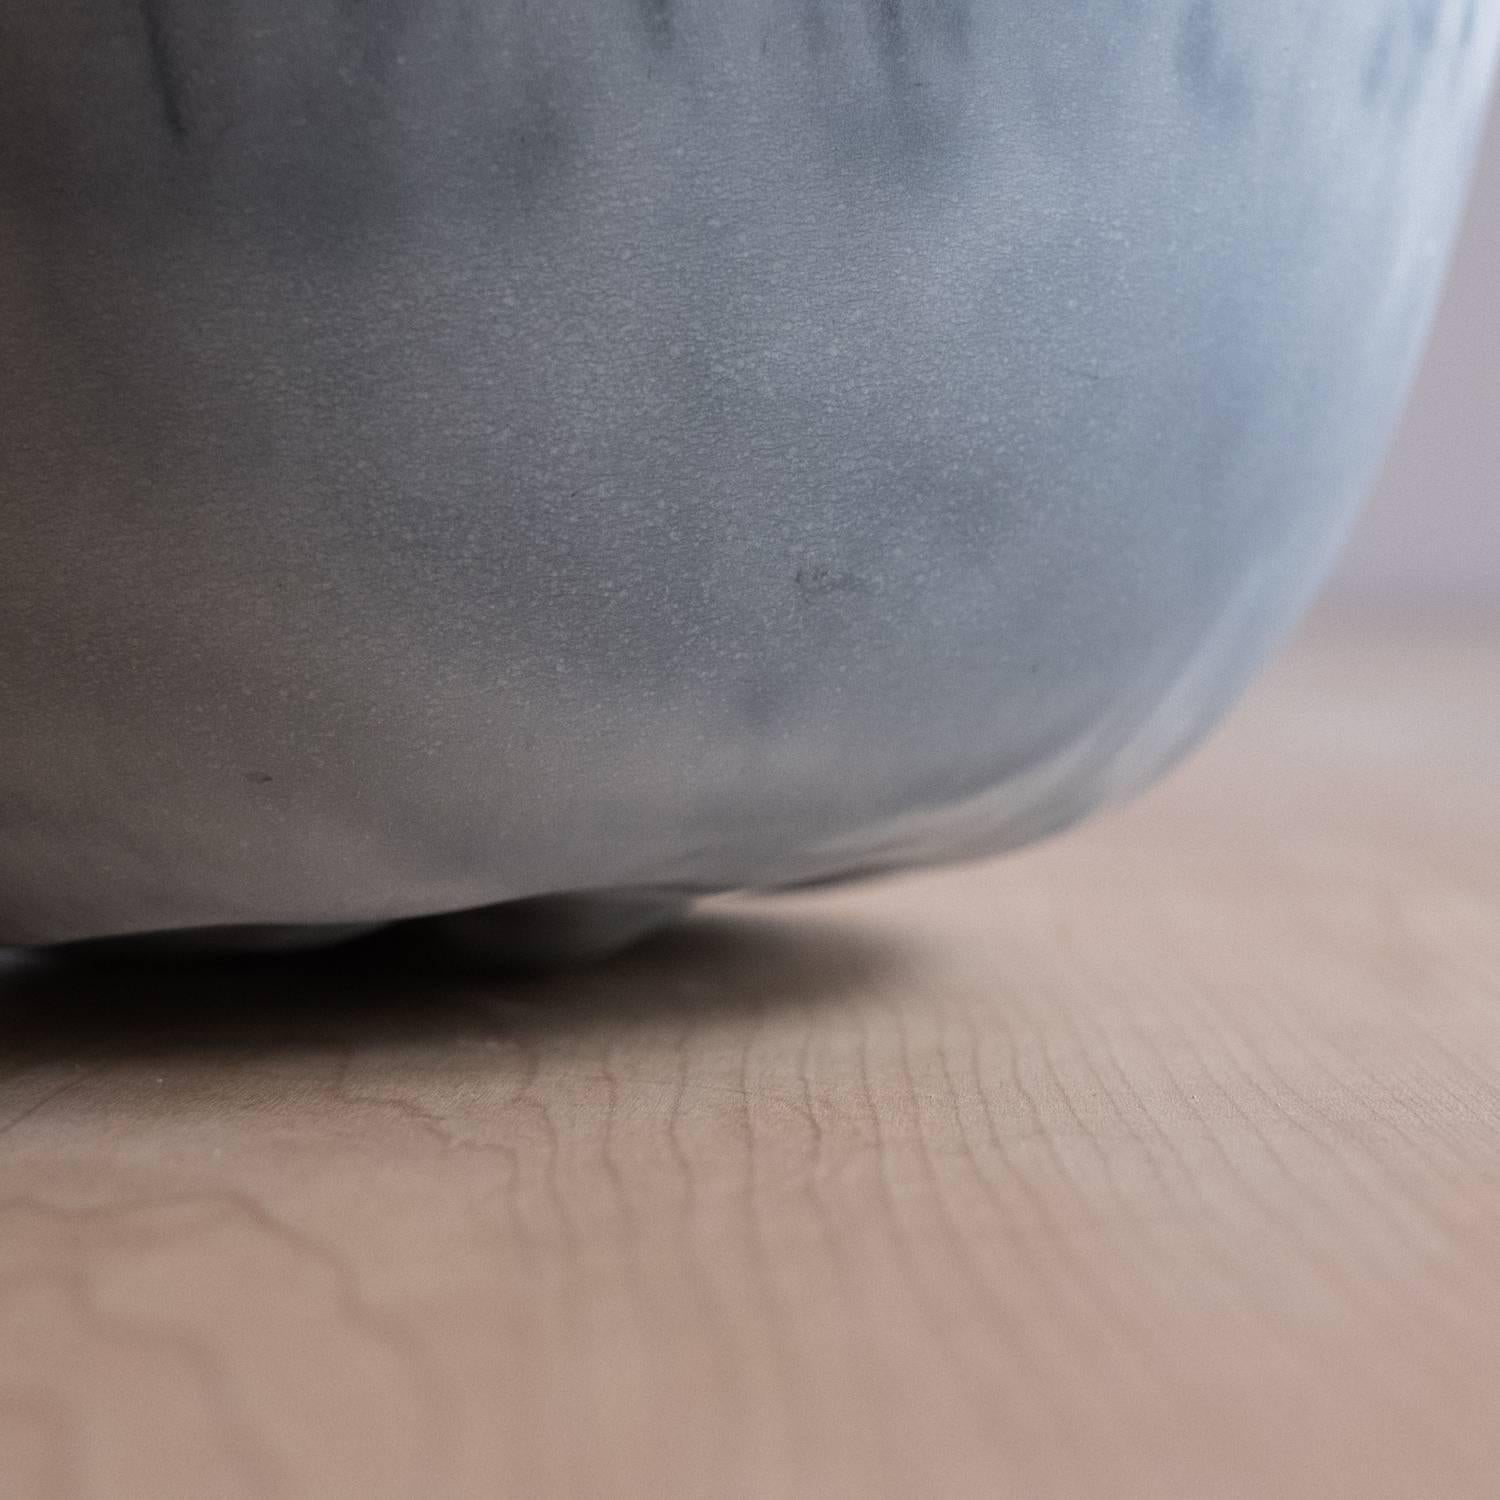 Handmade Cast Concrete Bowl in Grey by UMÉ Studio For Sale 7